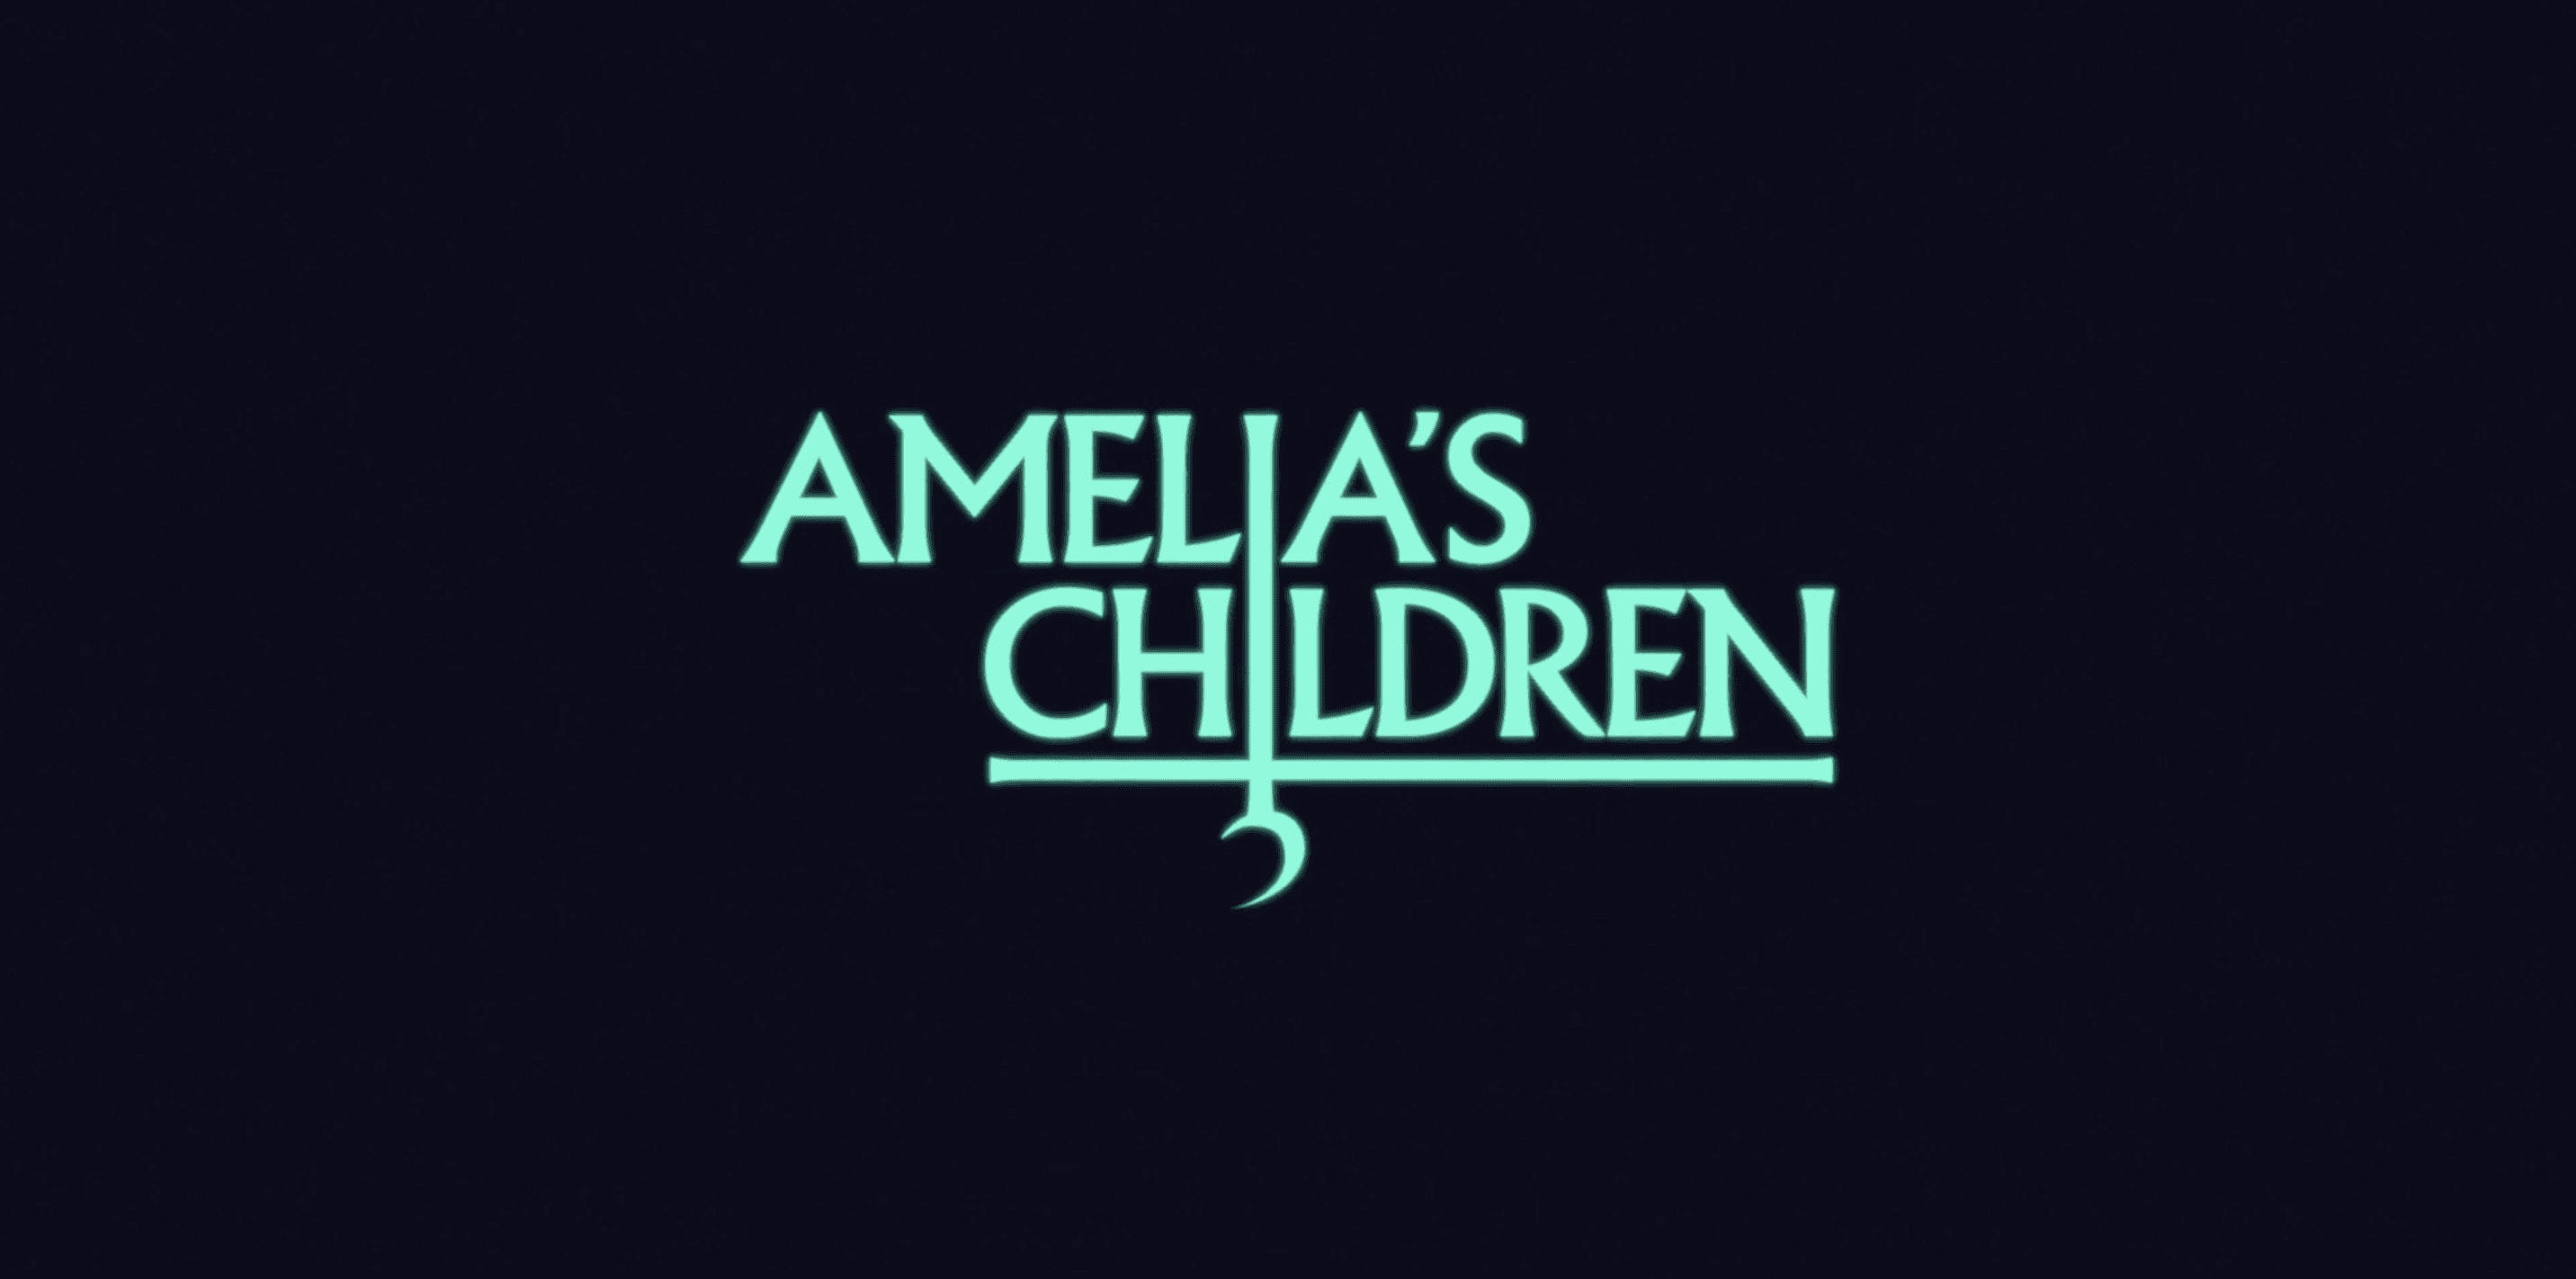 Amelia’s Children logo